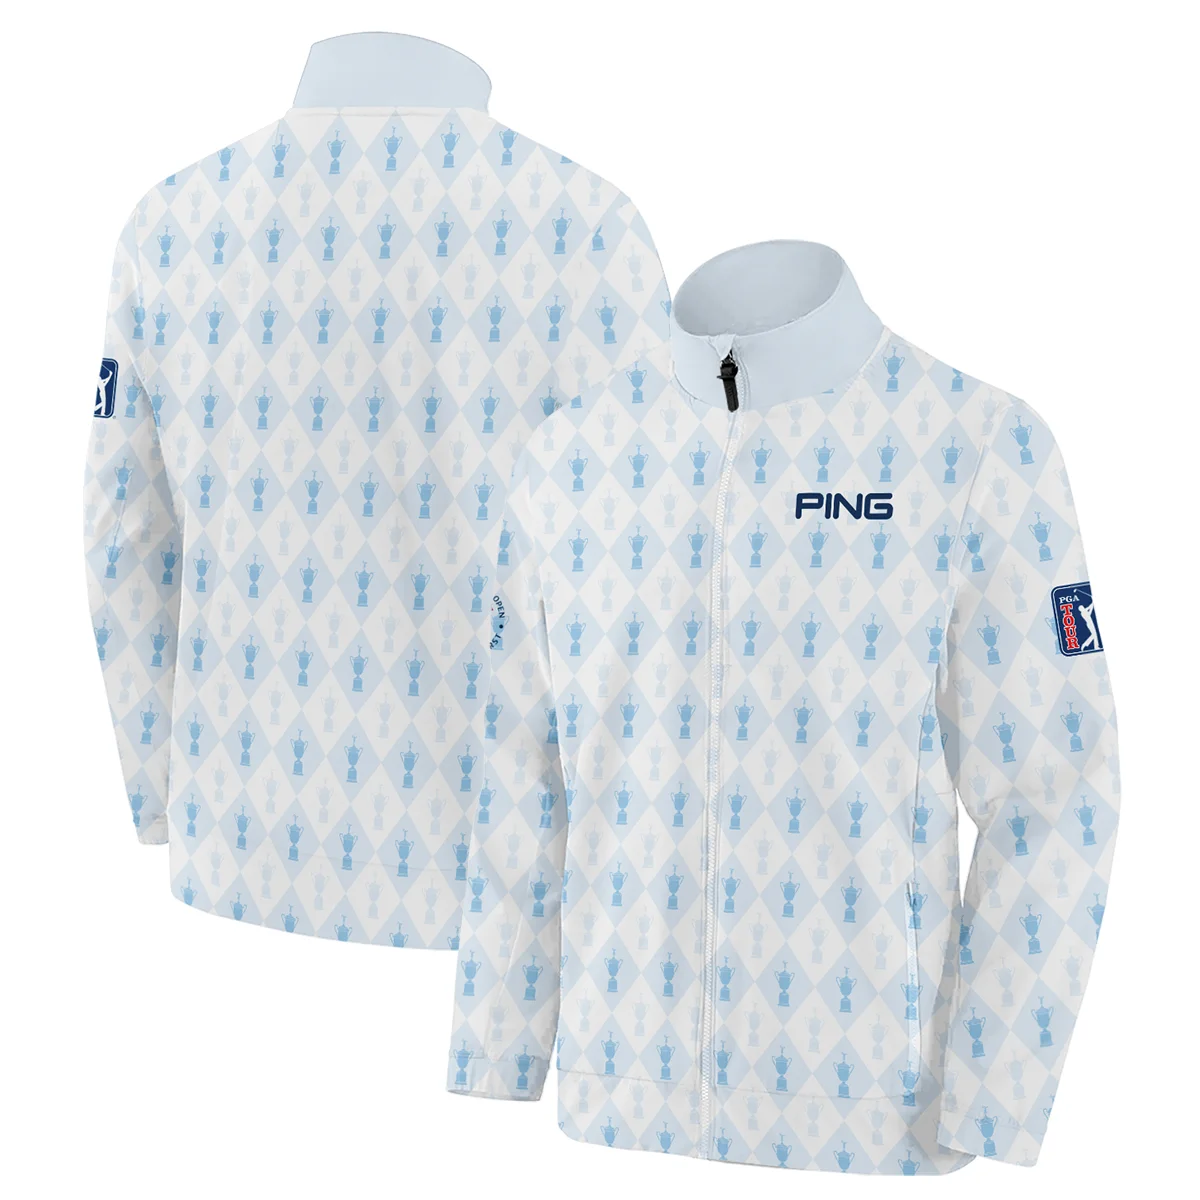 PGA Tour 124th U.S. Open Pinehurst Ping Polo Shirt Sports Pattern Cup Color Light Blue Polo Shirt For Men